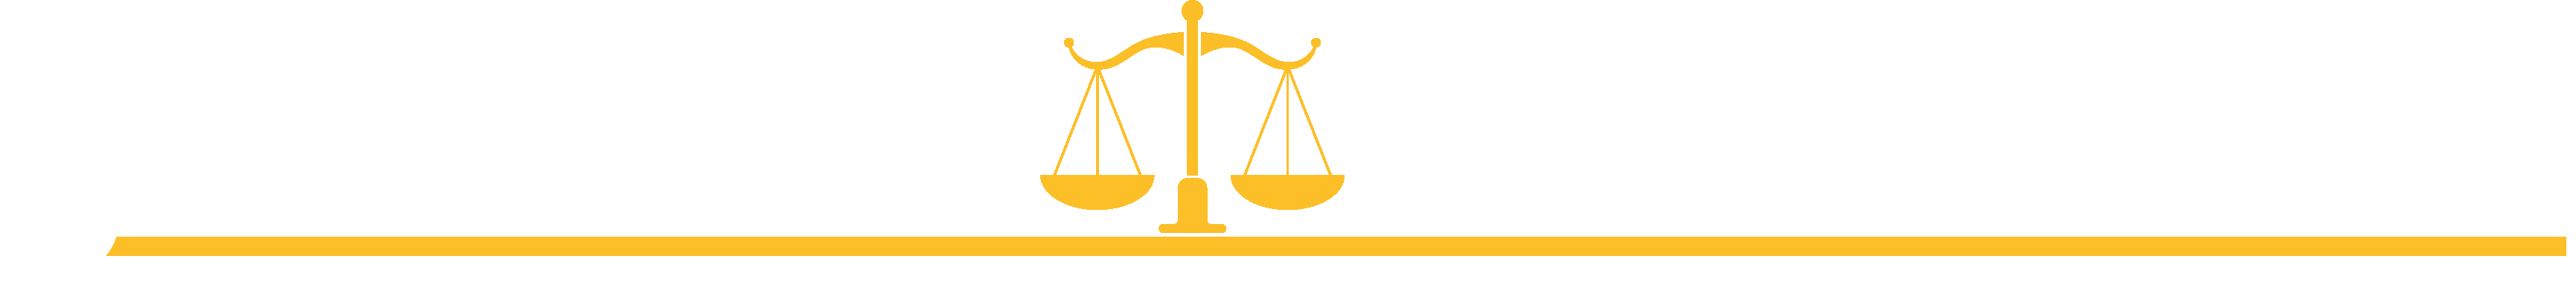 janson lawyers logo